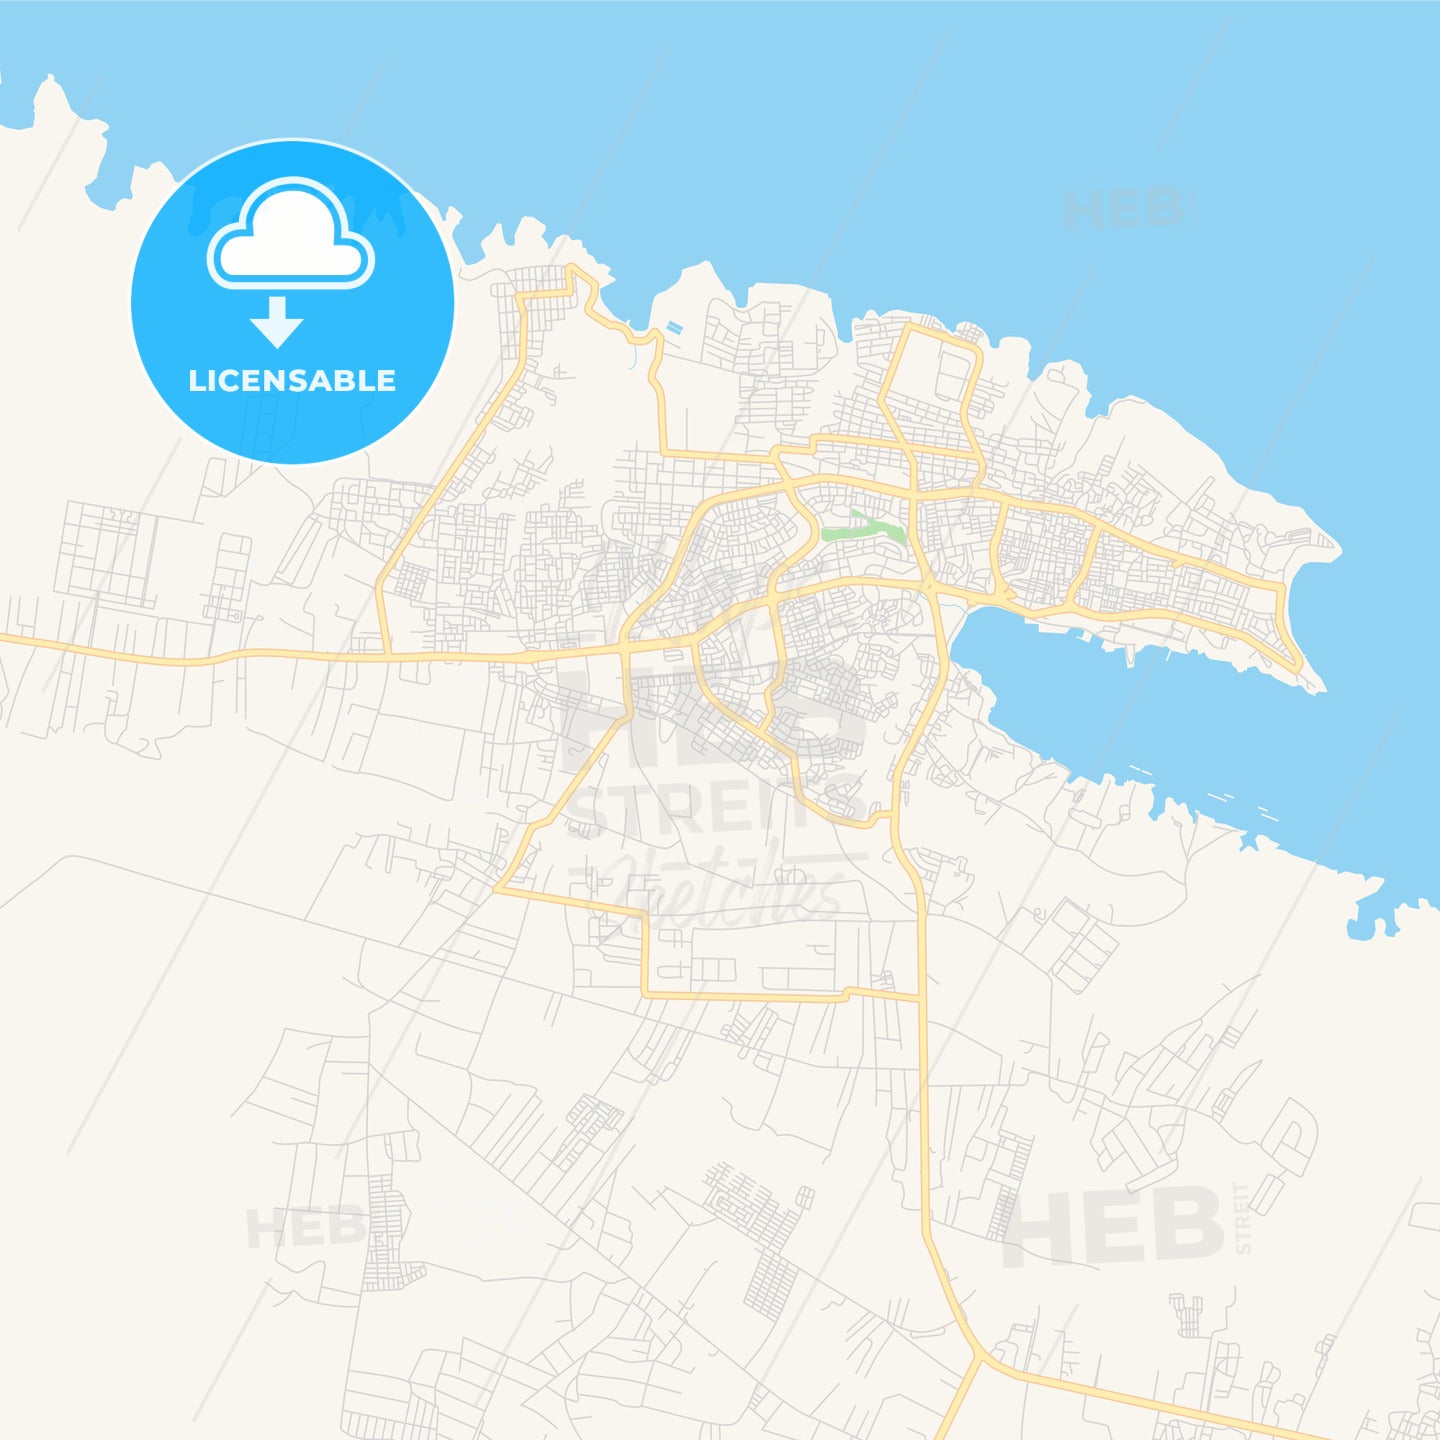 Printable street map of Tobruk, Libya